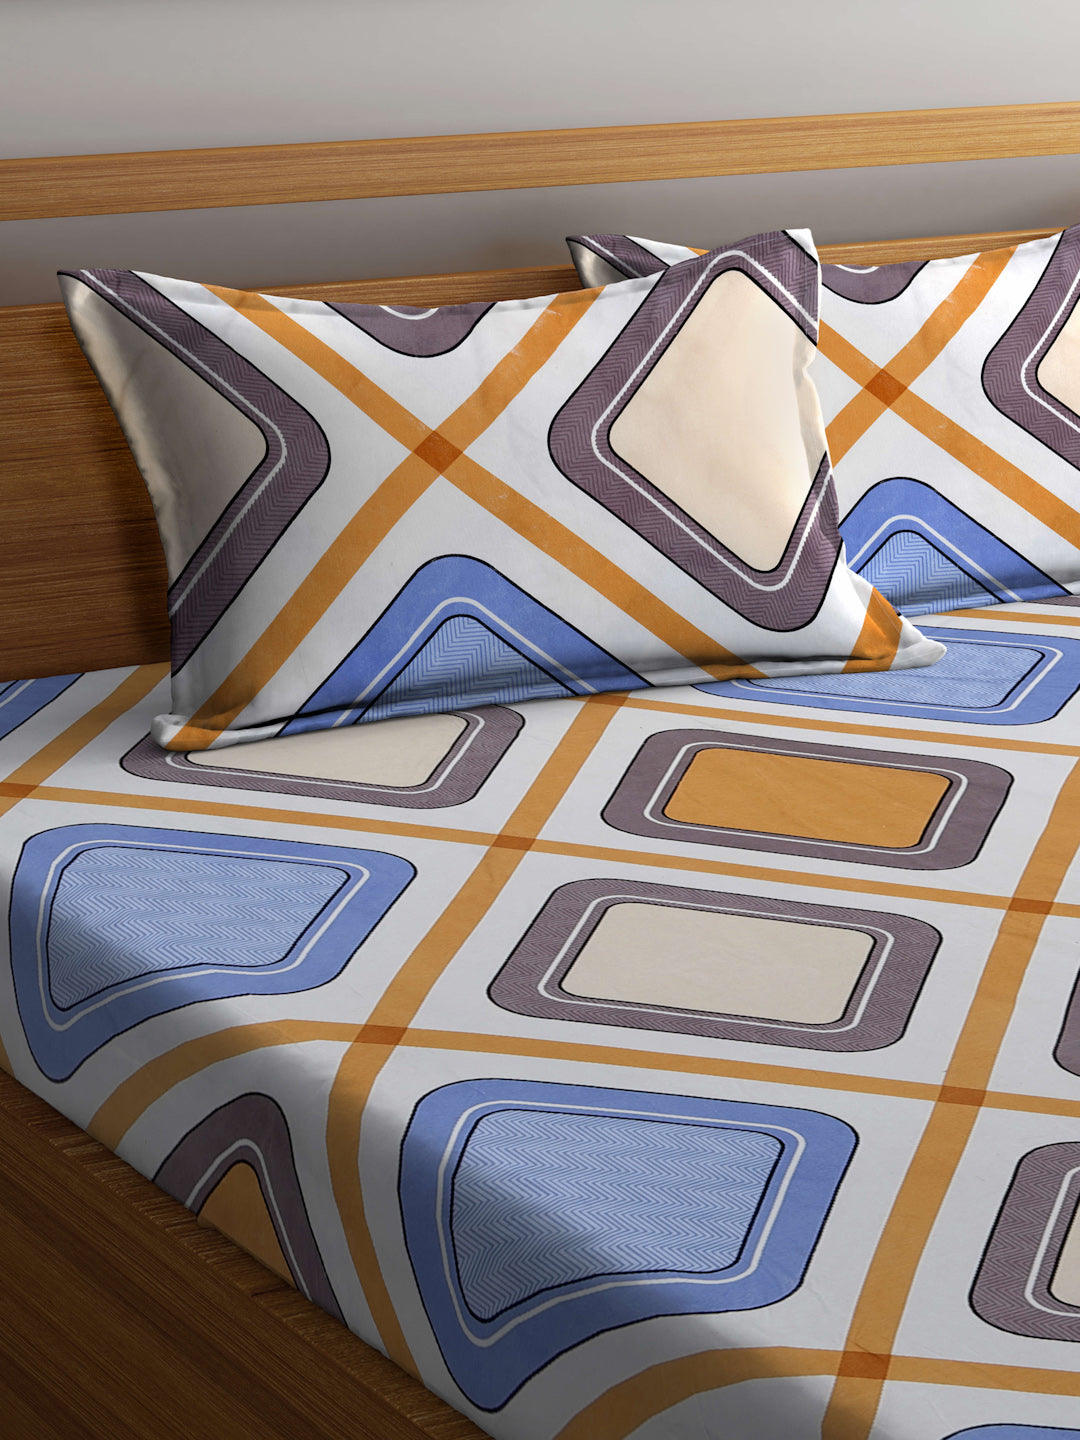 Klotthe Multi Geometric 300 TC Cotton Blend Super King Double Bedsheet Set in Book Fold Packing